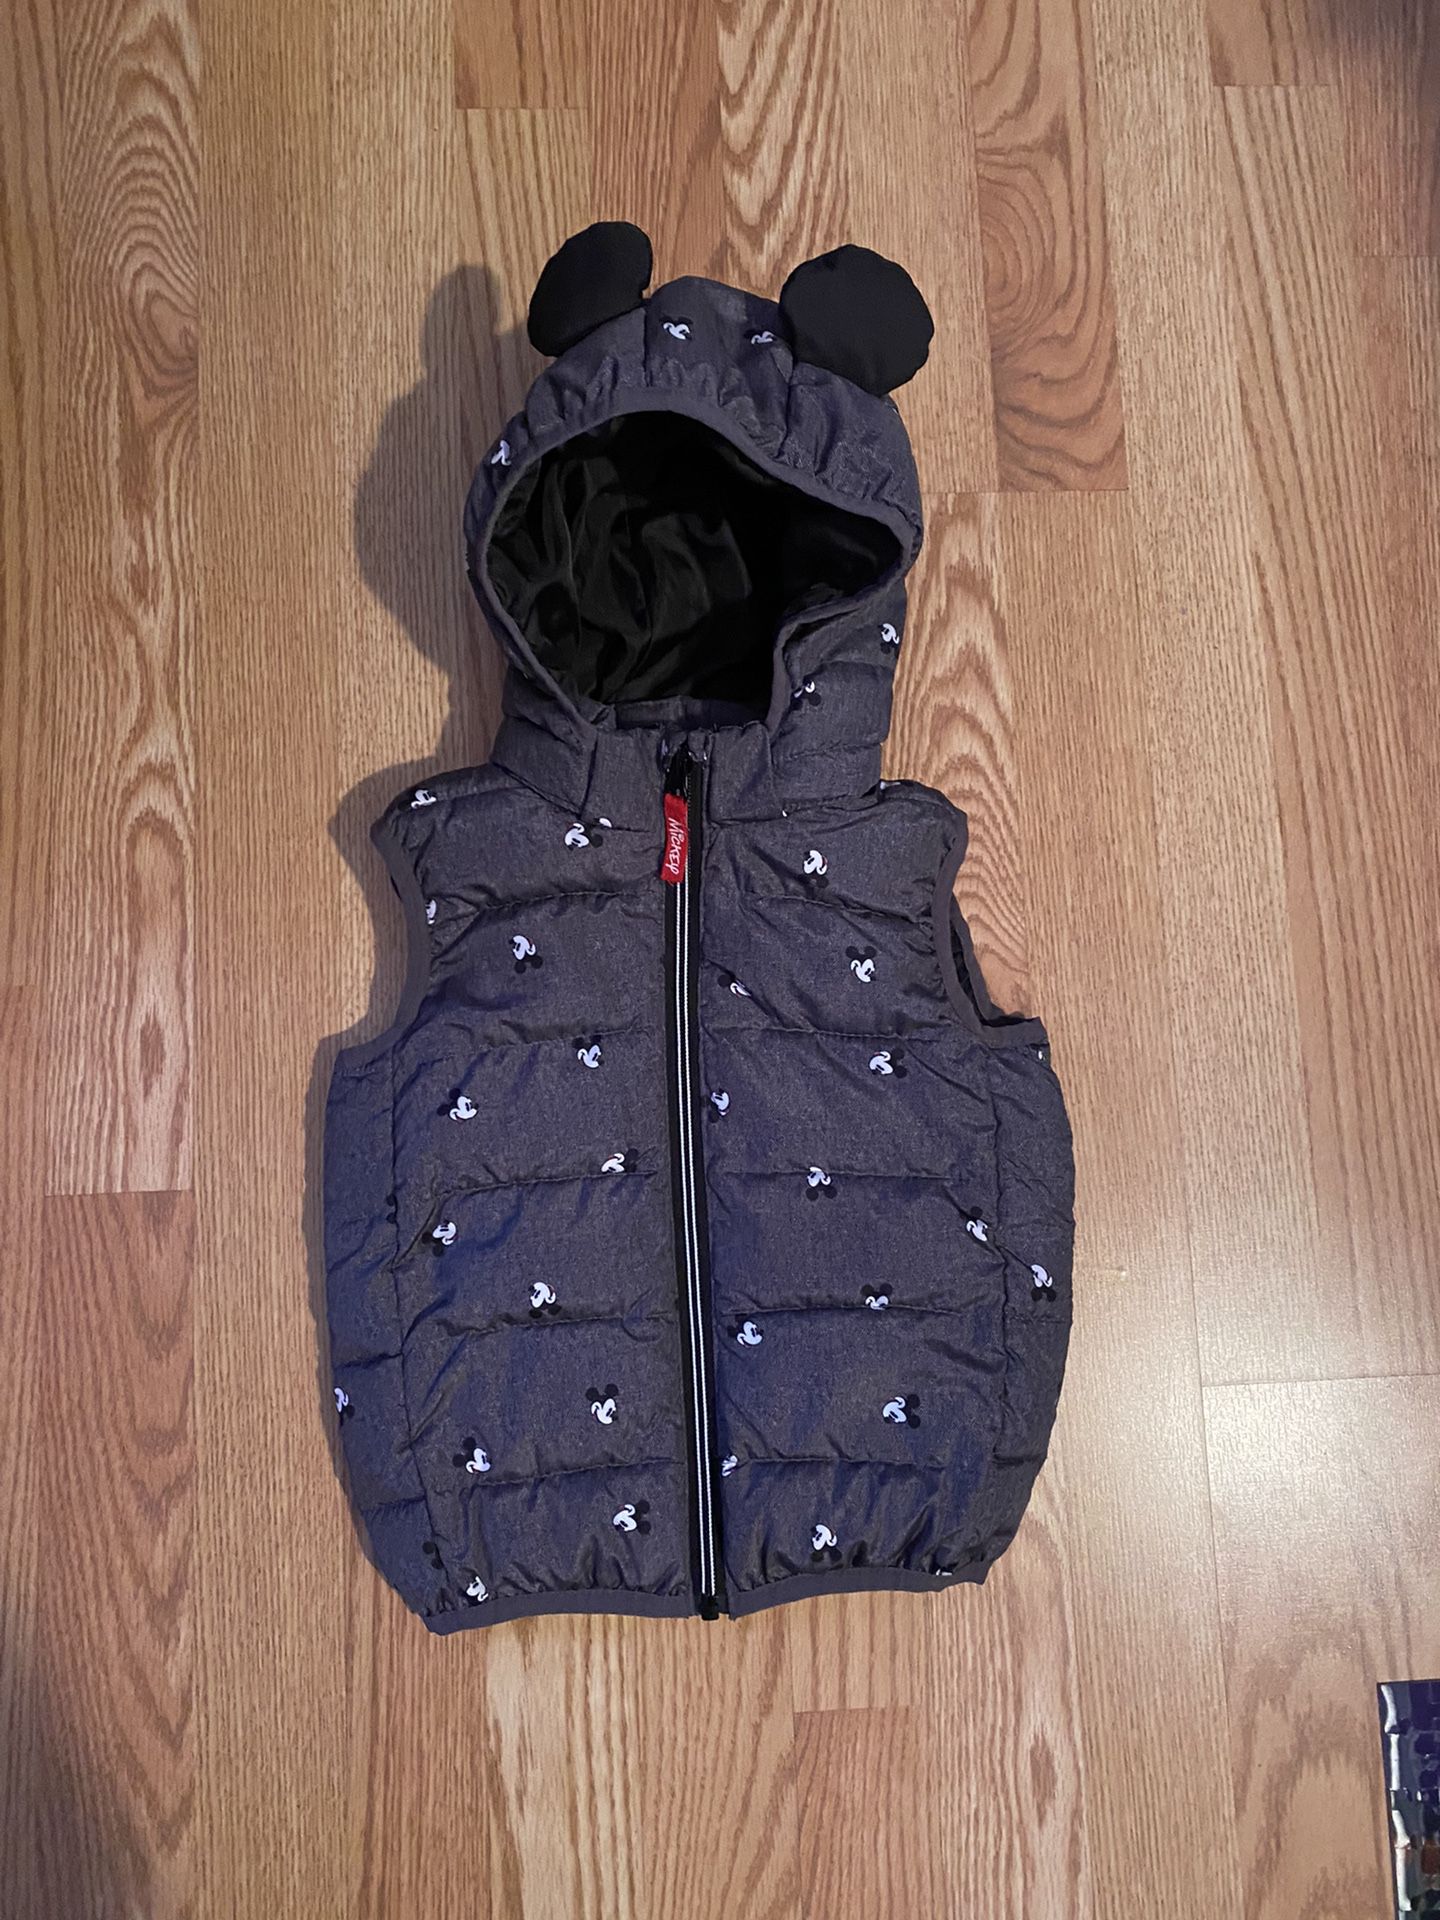 Toddler Boy Size 2T Mickey Mouse Vest 